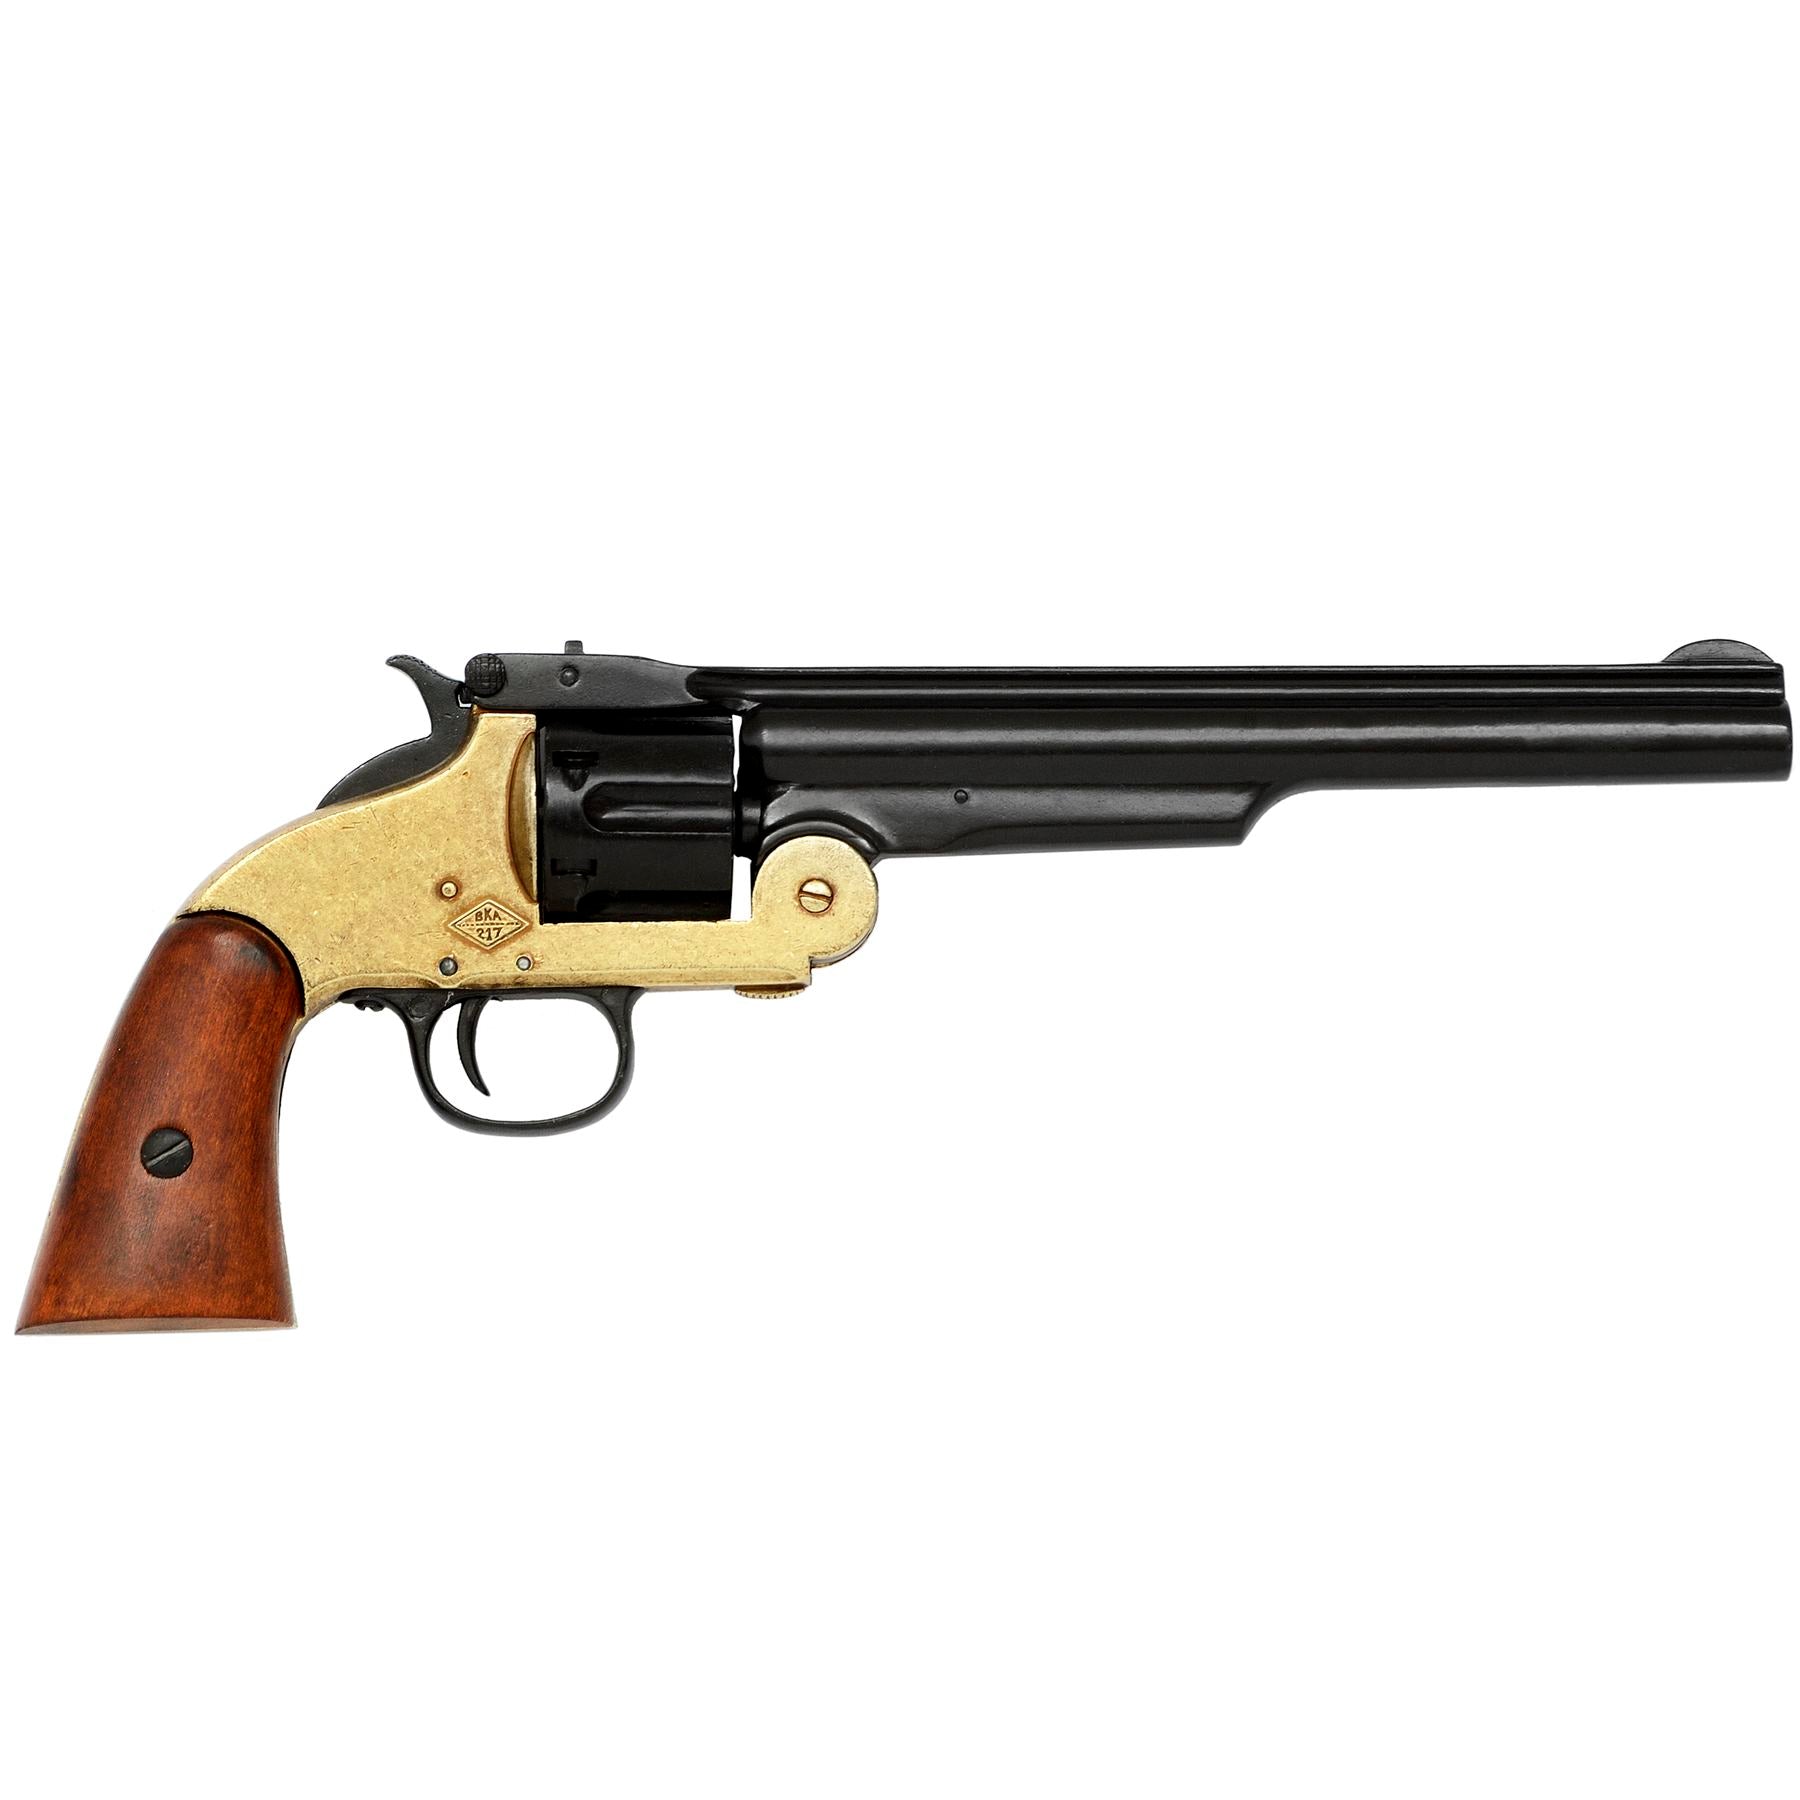 1869 Smith & Wesson 6 Shot Revolver In Black & Solid Brass by Denix G1008L